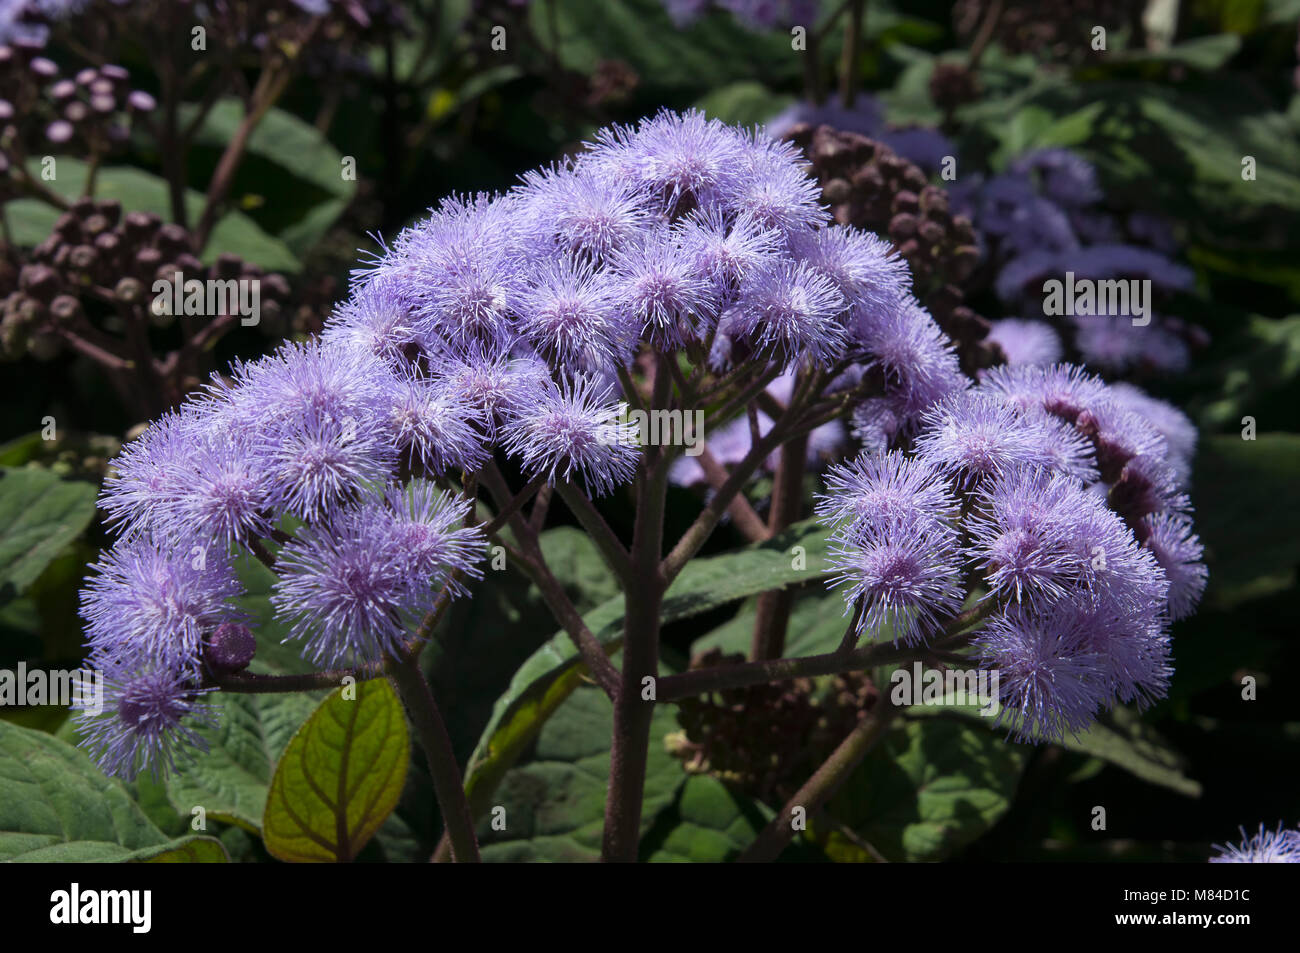 Sydney Australia, Flower cluster of a Mexican blue mist plant Stock Photo